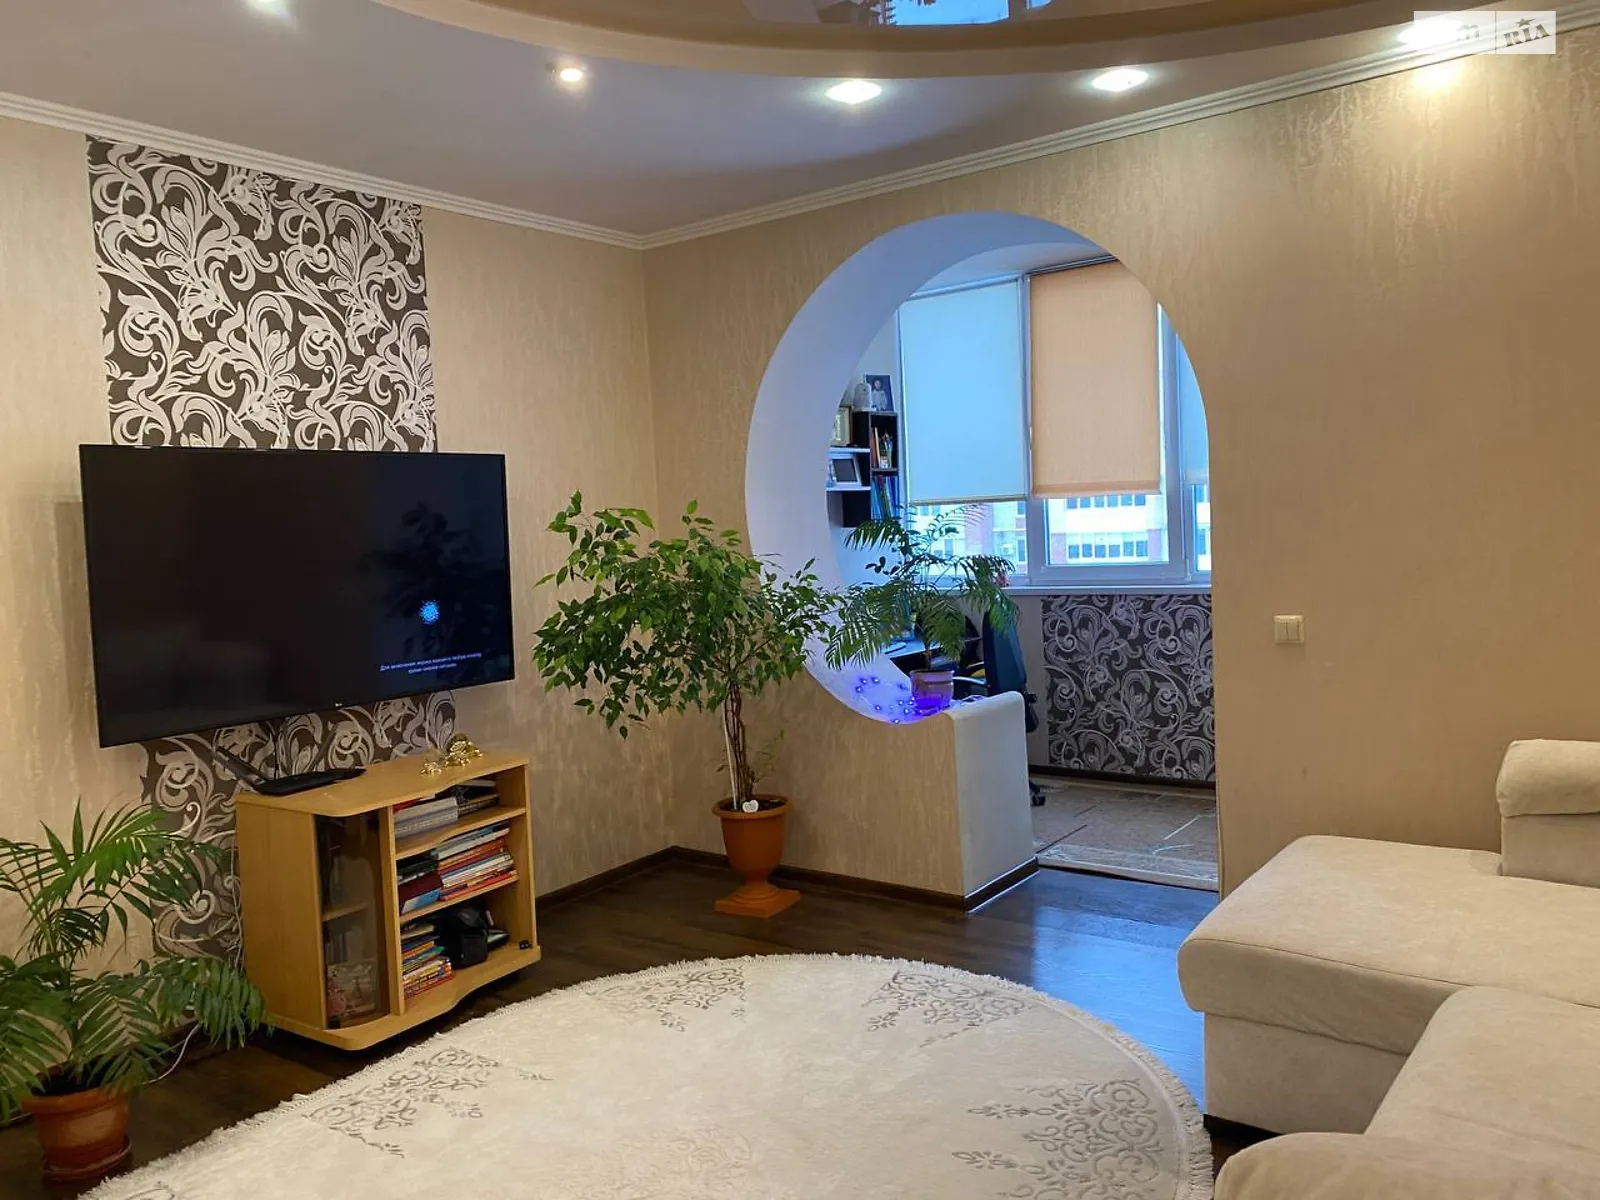 1-кімнатна квартира 53.1 кв. м у Луцьку, цена: 59000 $